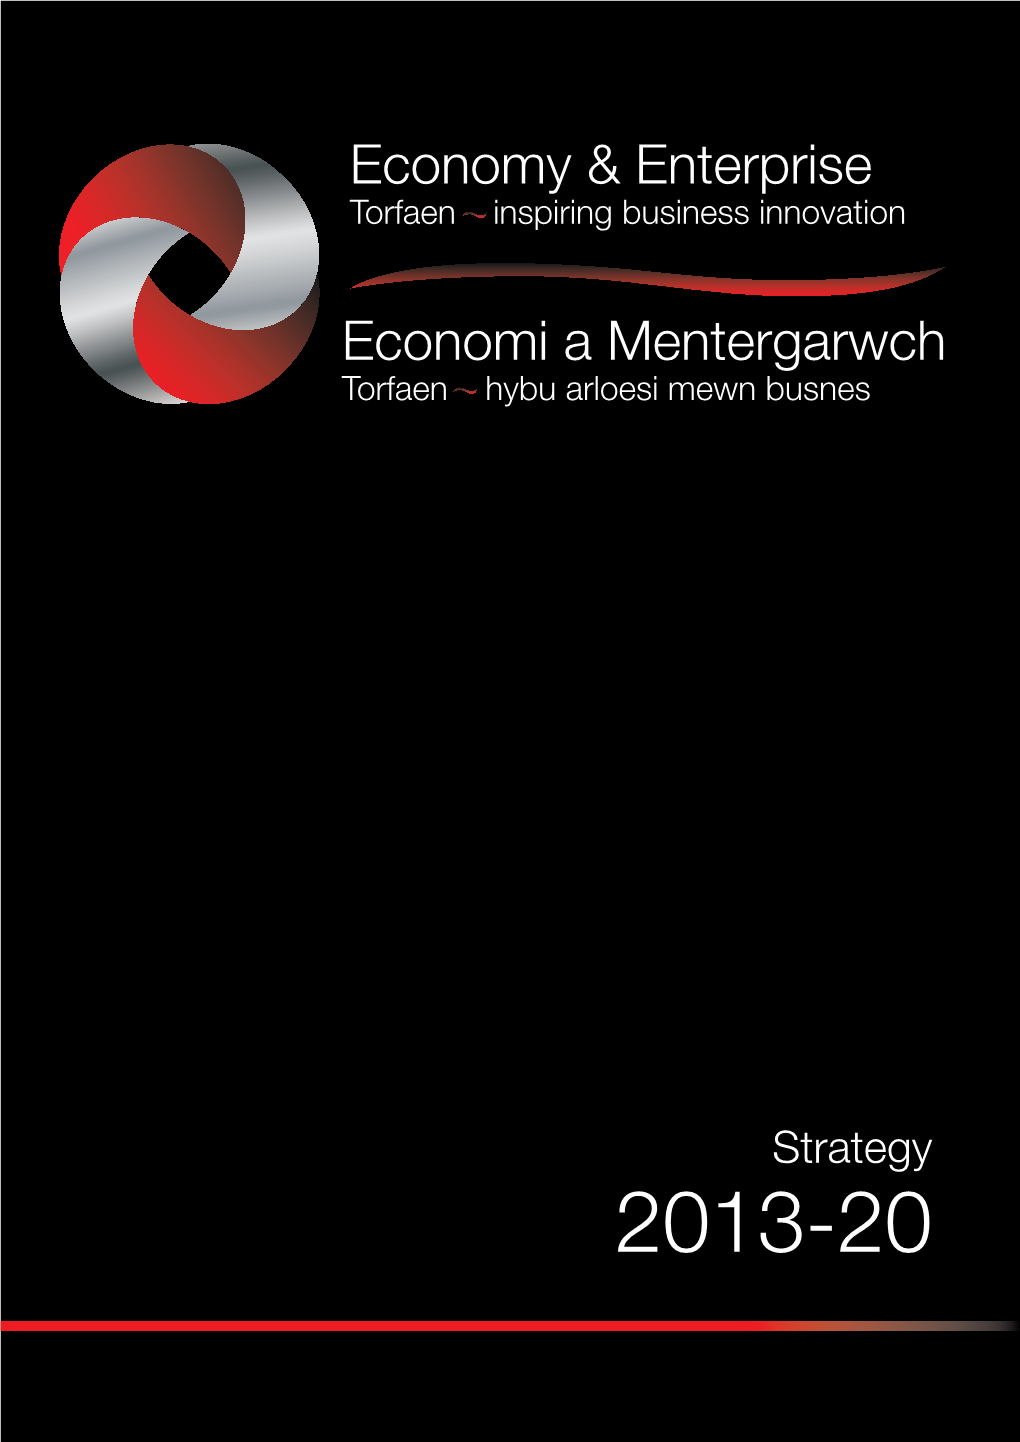 2013-20 Torfaen Economy & Enterprise Strategy 2013 - 20 Torfaen Economy & Enterprise Strategy 2013 - 20